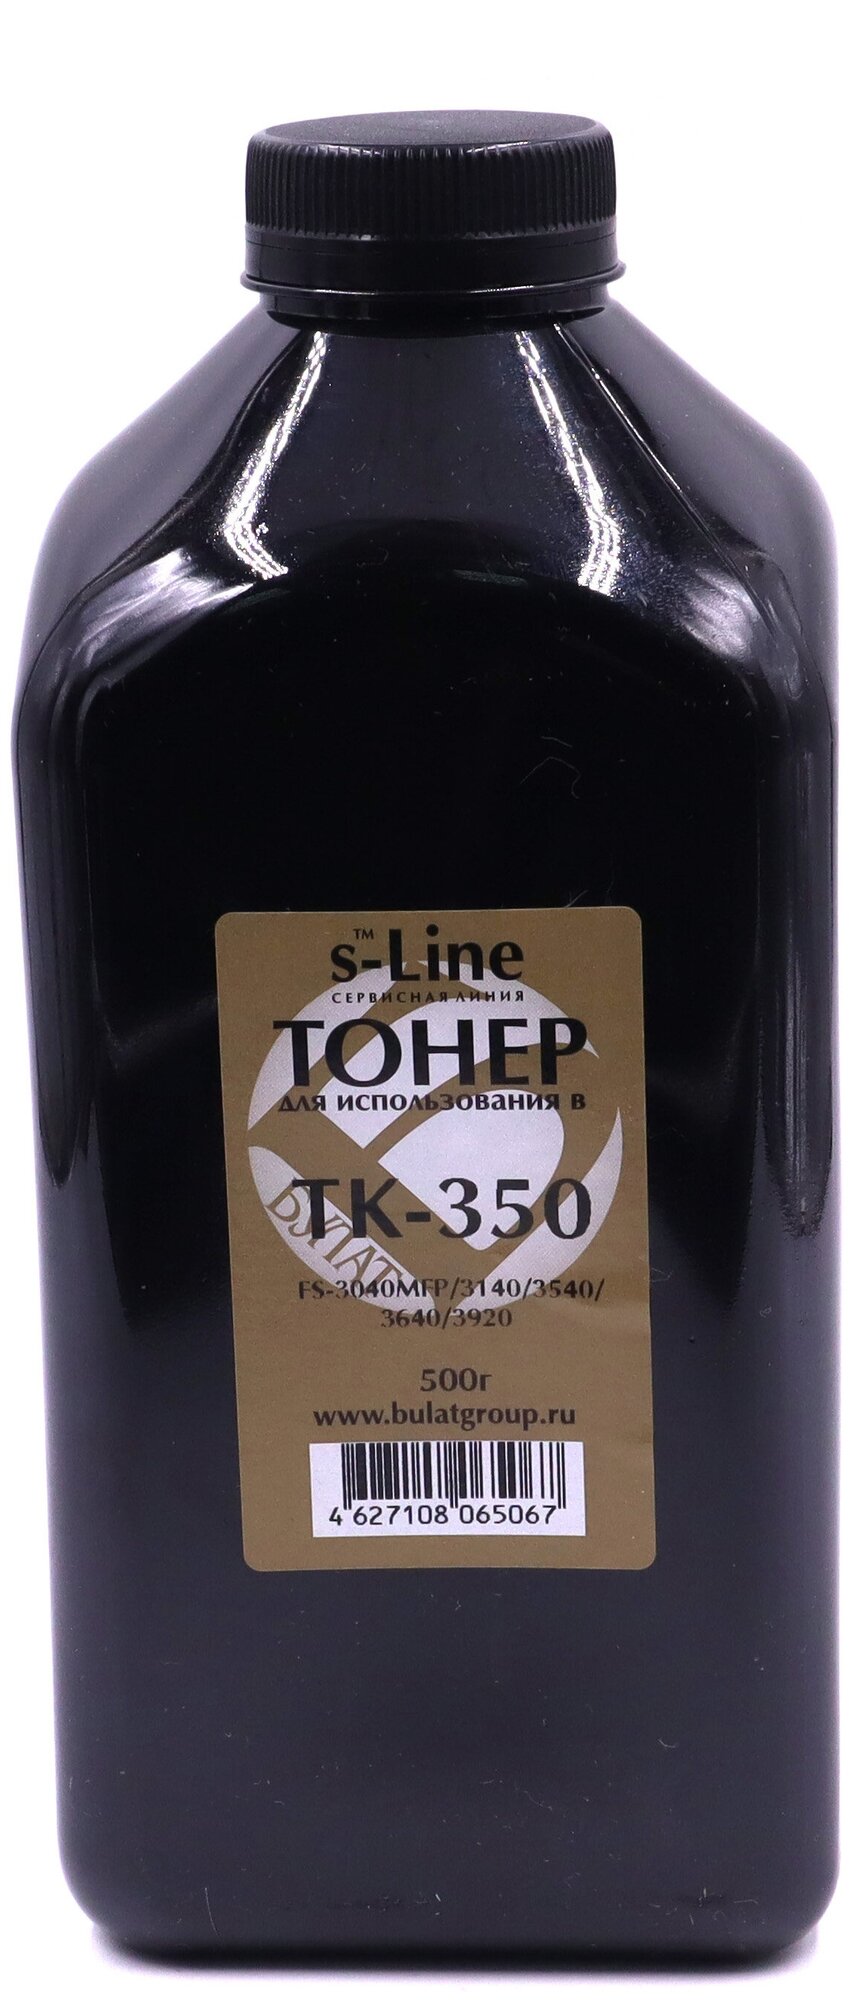 Тонер булат s-Line TK-350 для Kyocera FS-3920 (Чёрный, банка 500 г)